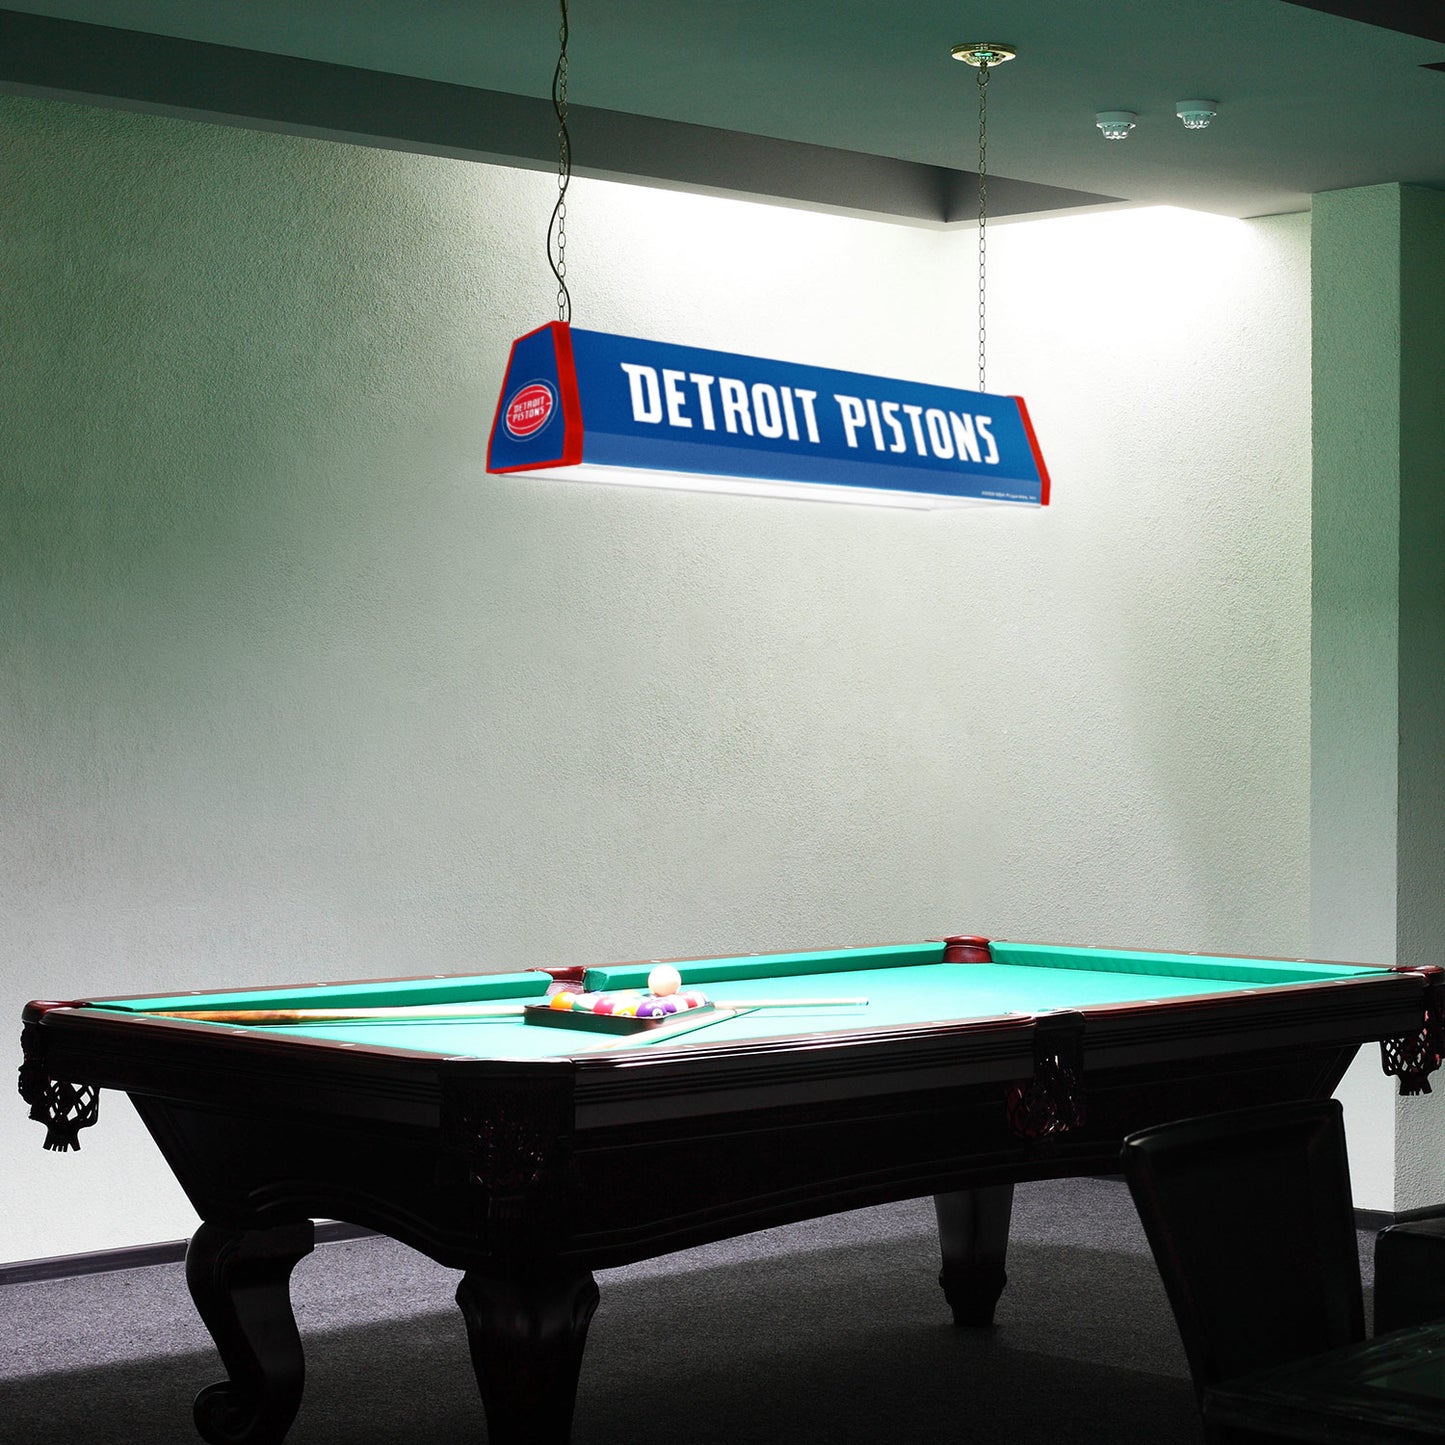 Detroit Pistons Standard Pool Table Light Room View